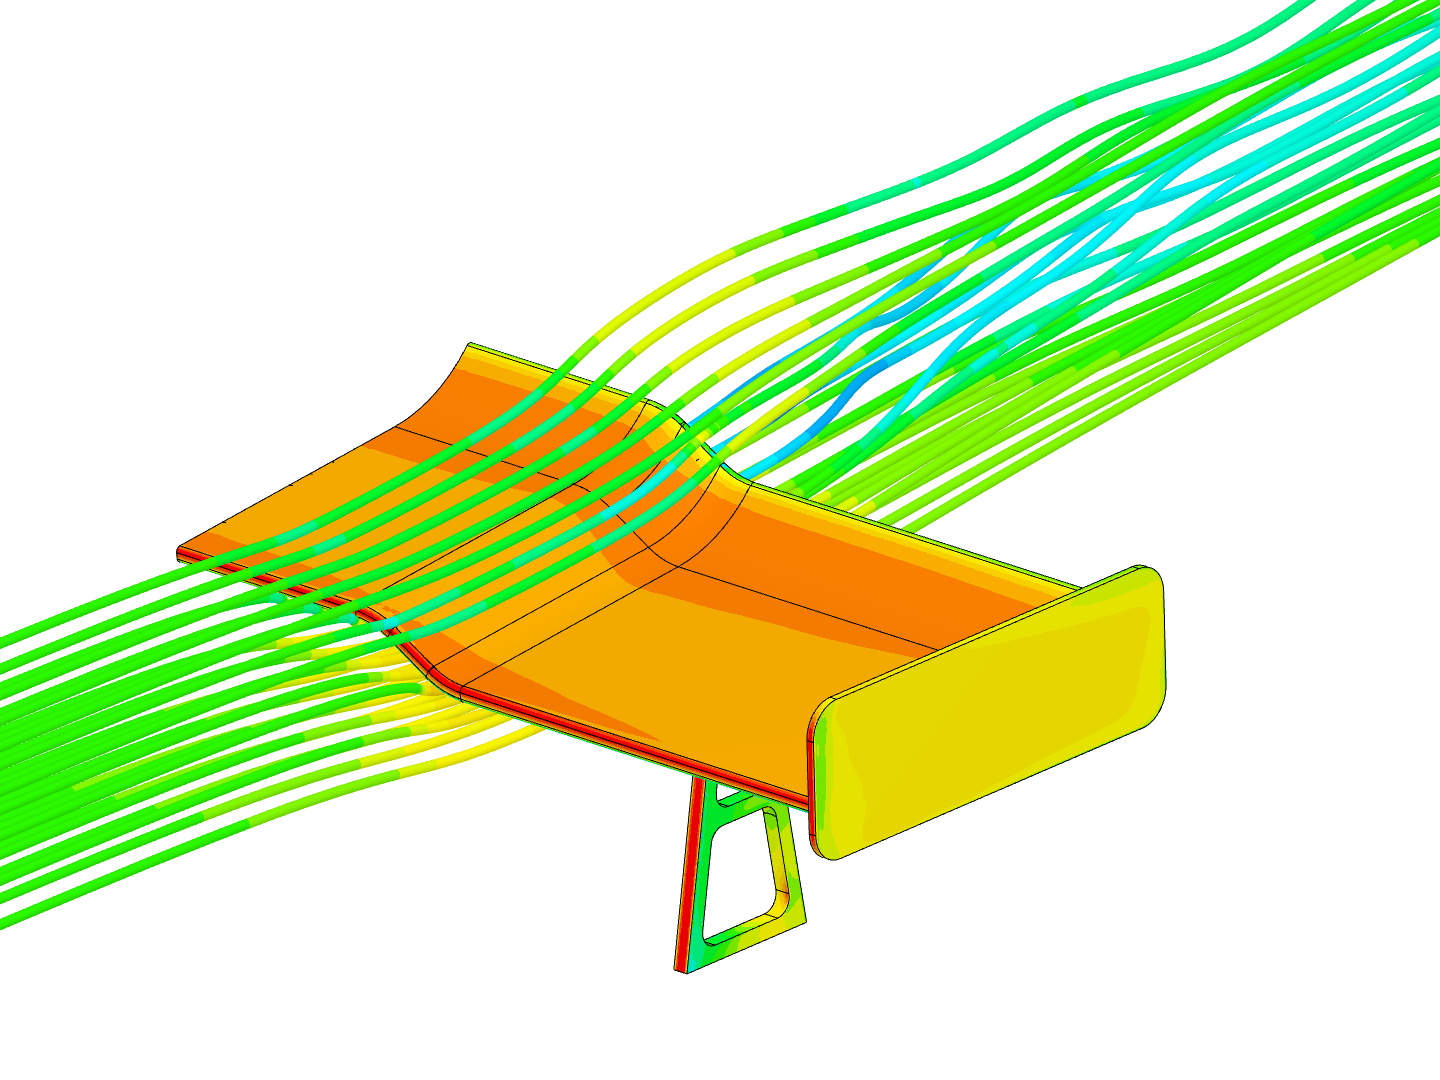 coursera - Airflow Around a GT car image